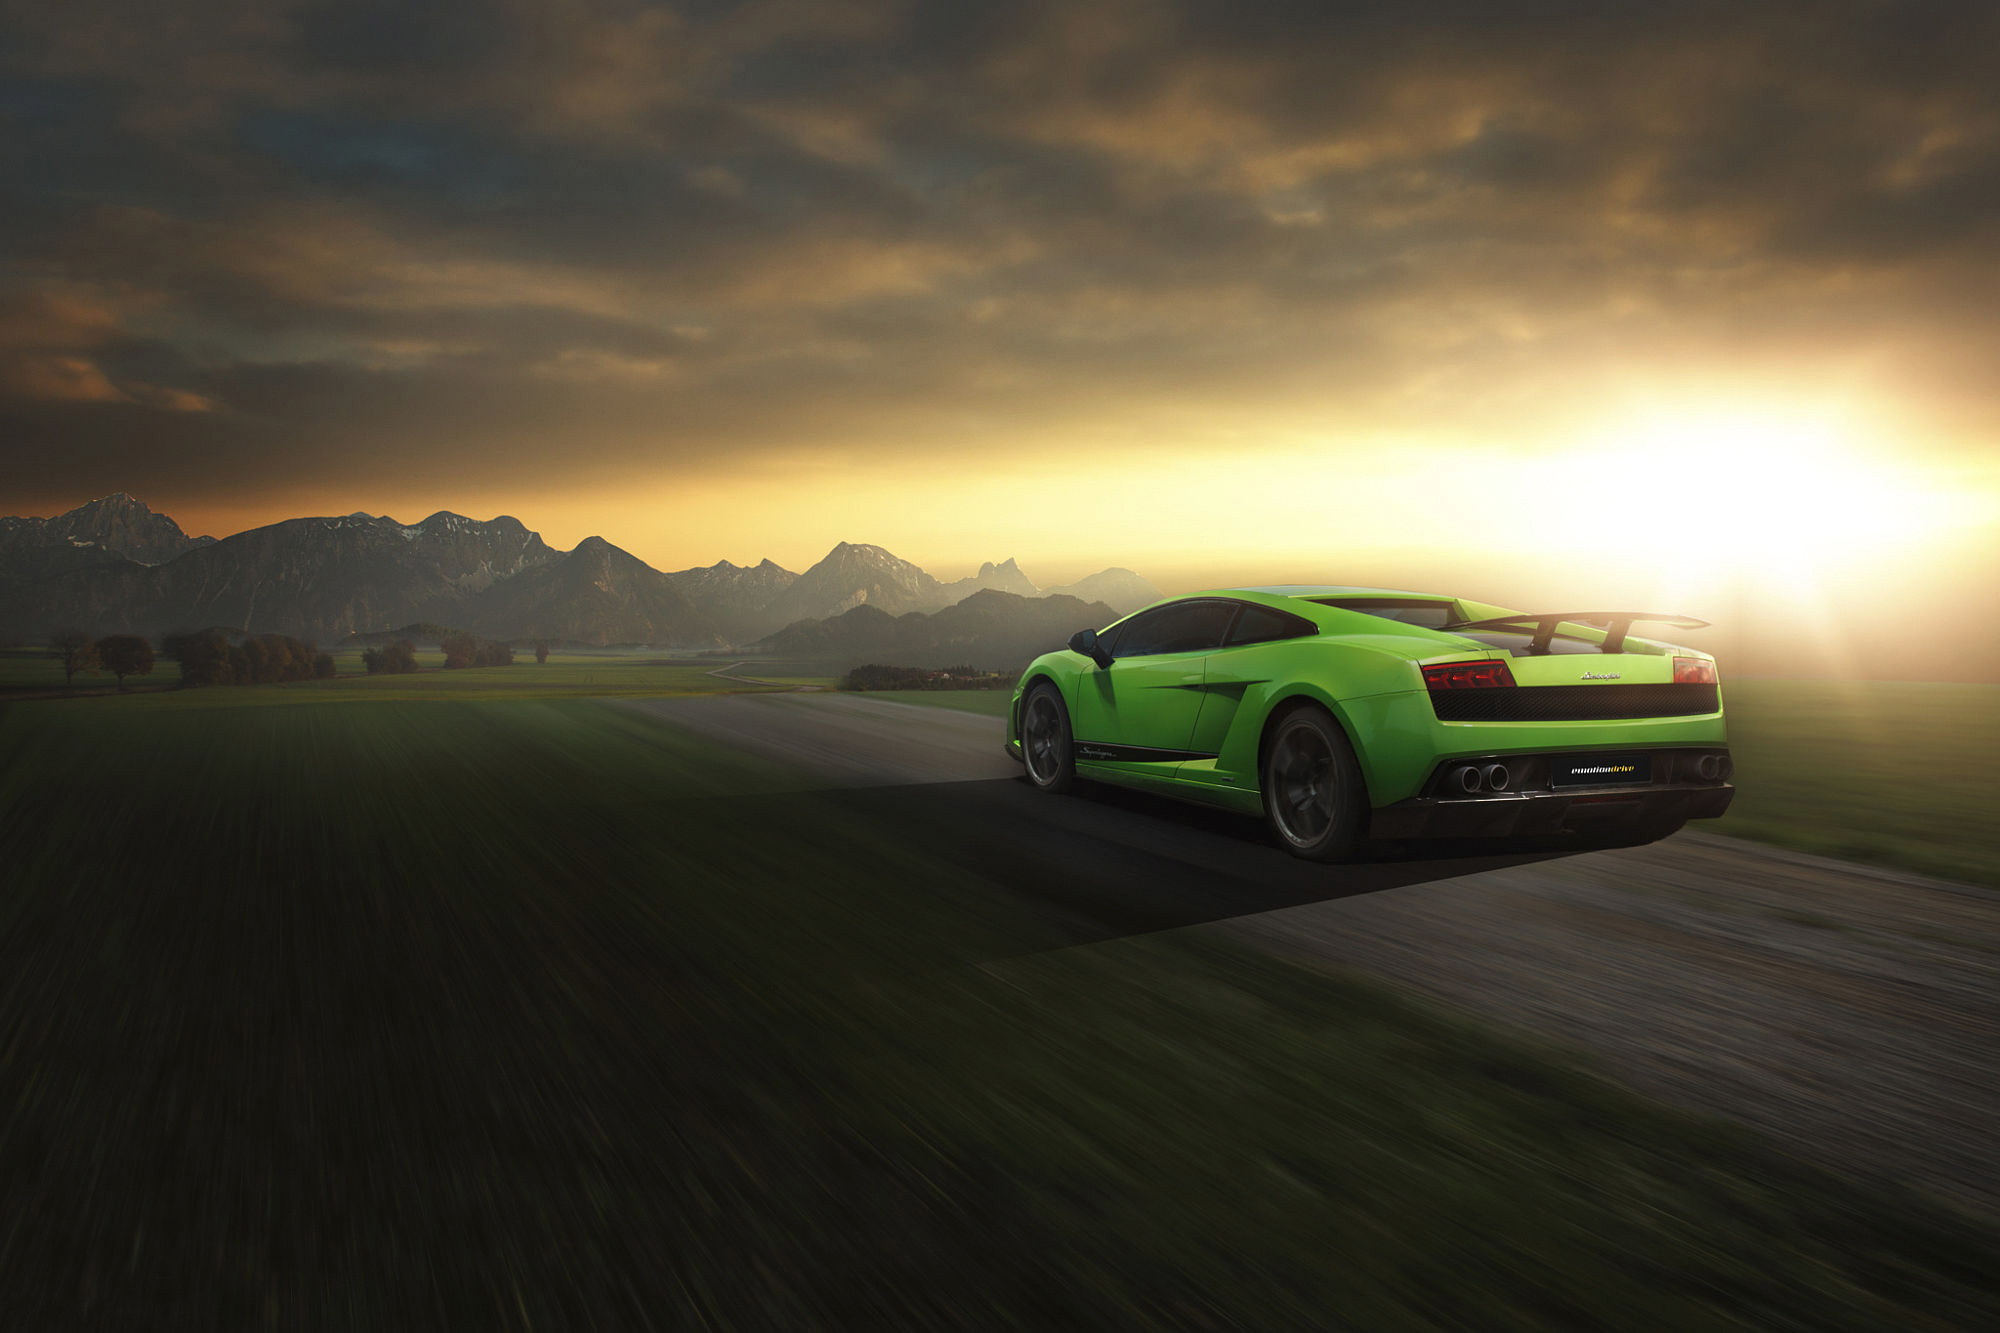 Laden Sie das Lamborghini, Autos, Supersportwagen, Fahrzeuge, Lamborghini Gallardo Superleggera, Grünes Auto-Bild kostenlos auf Ihren PC-Desktop herunter